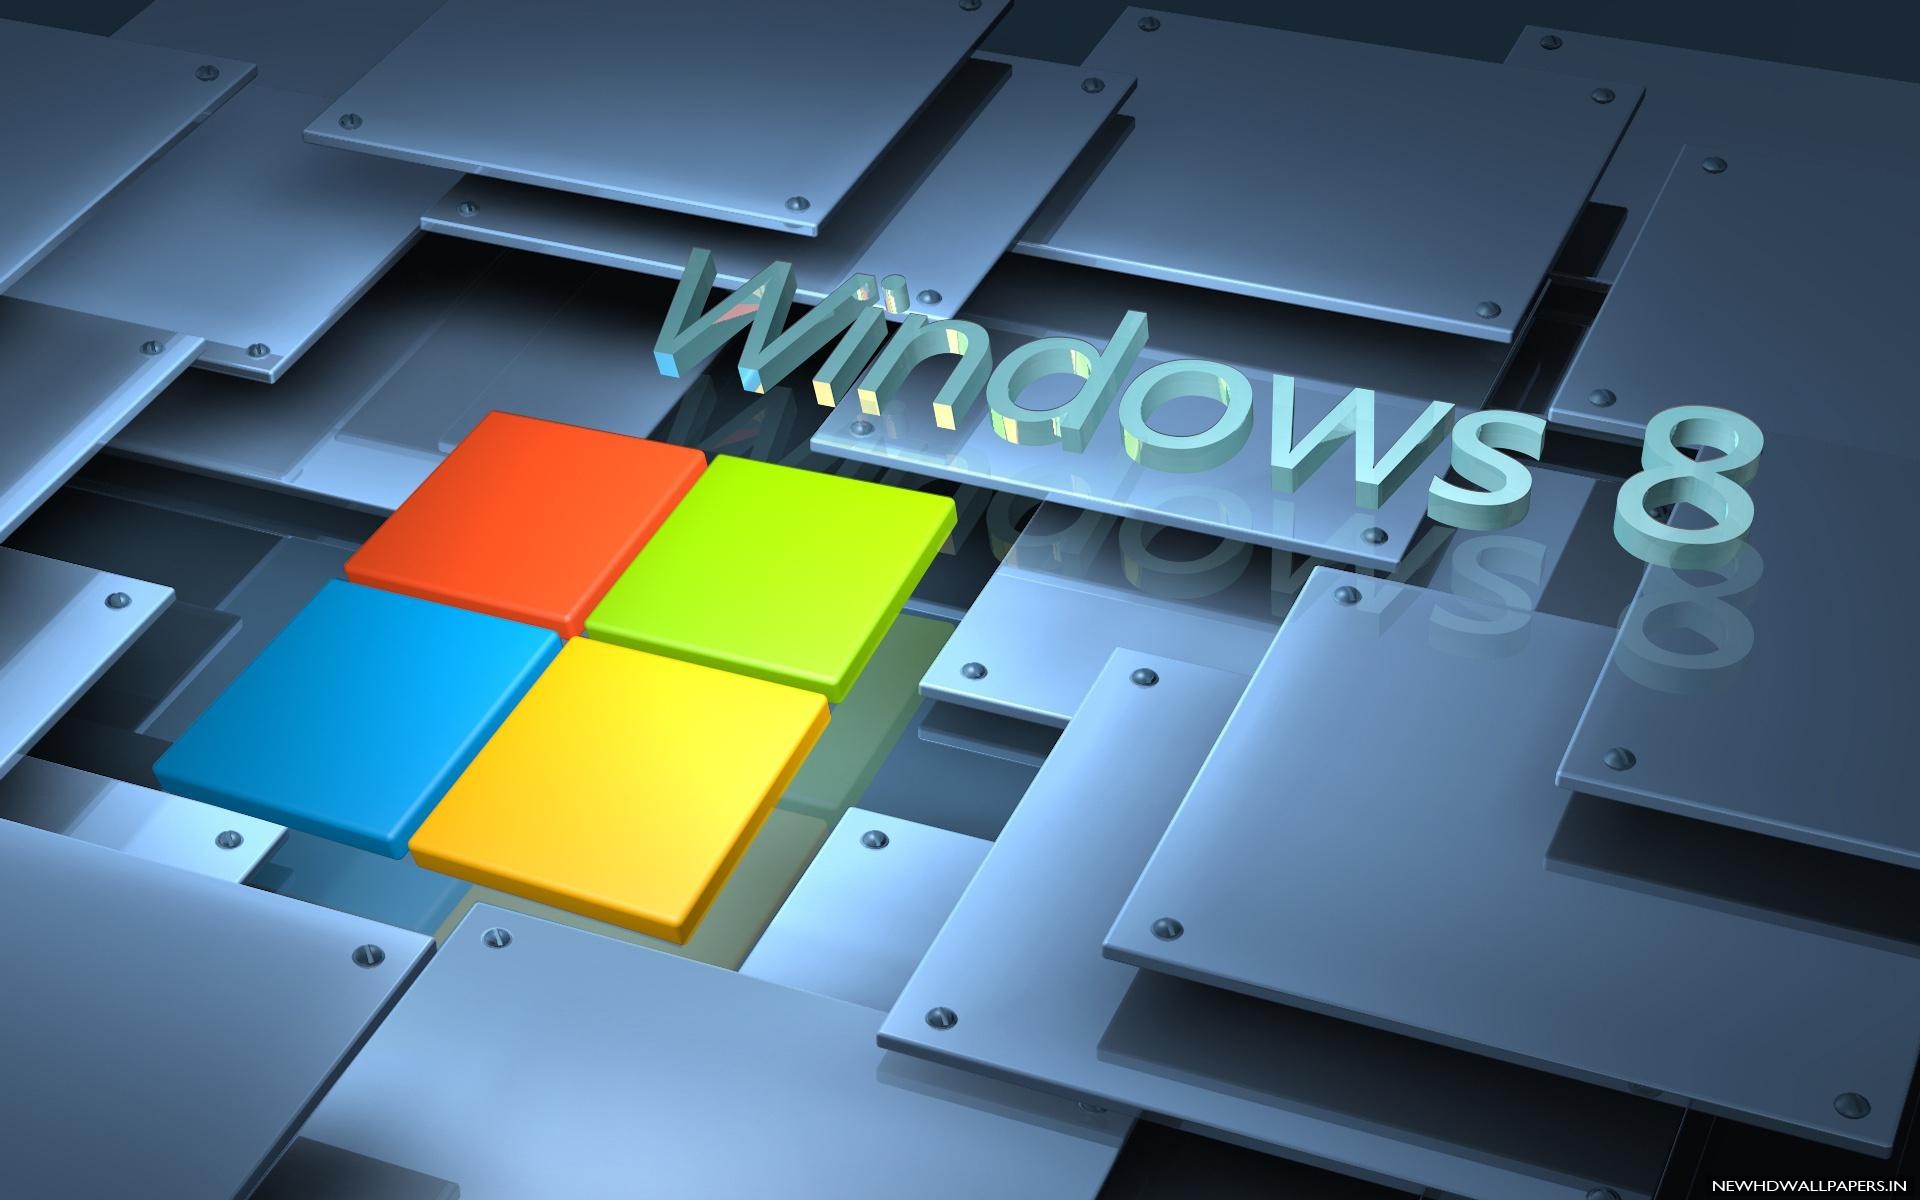 Microsoft Windows Computer Wallpaper - New HD Wallpapers